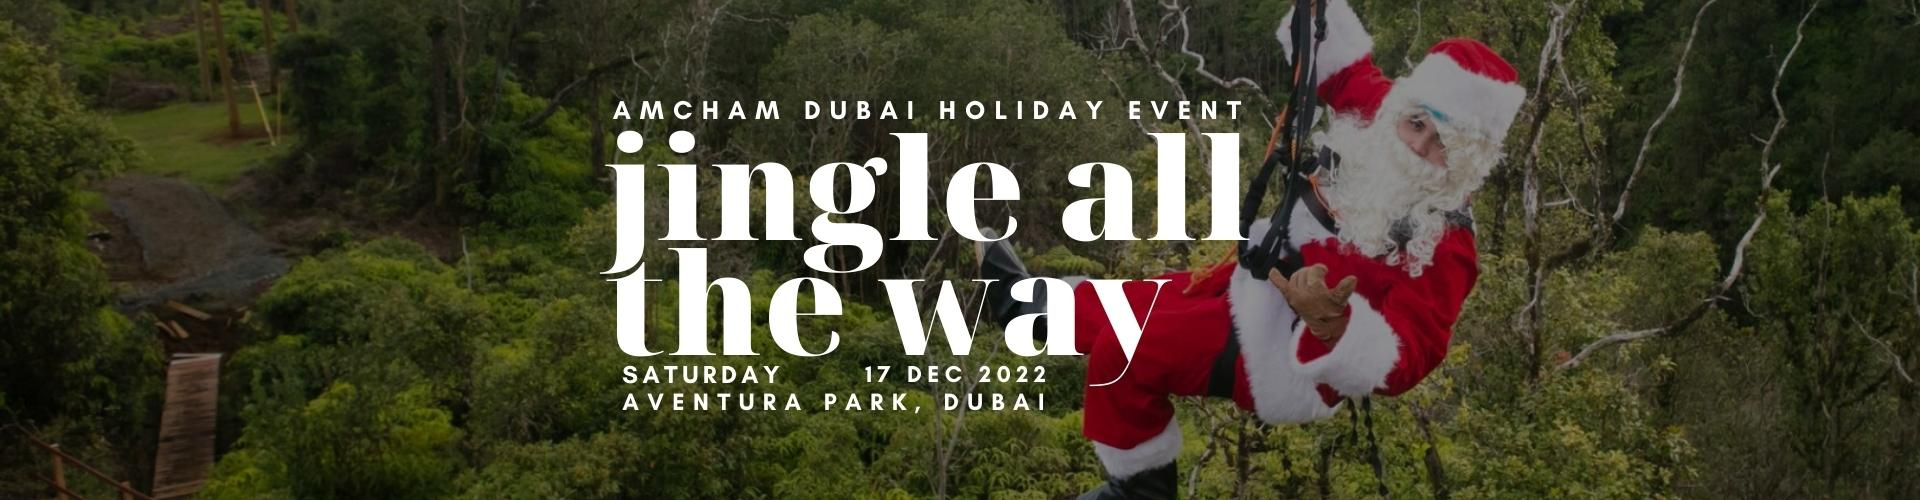 thumbnails AmCham Dubai "Jingles All the Way" Holiday Event